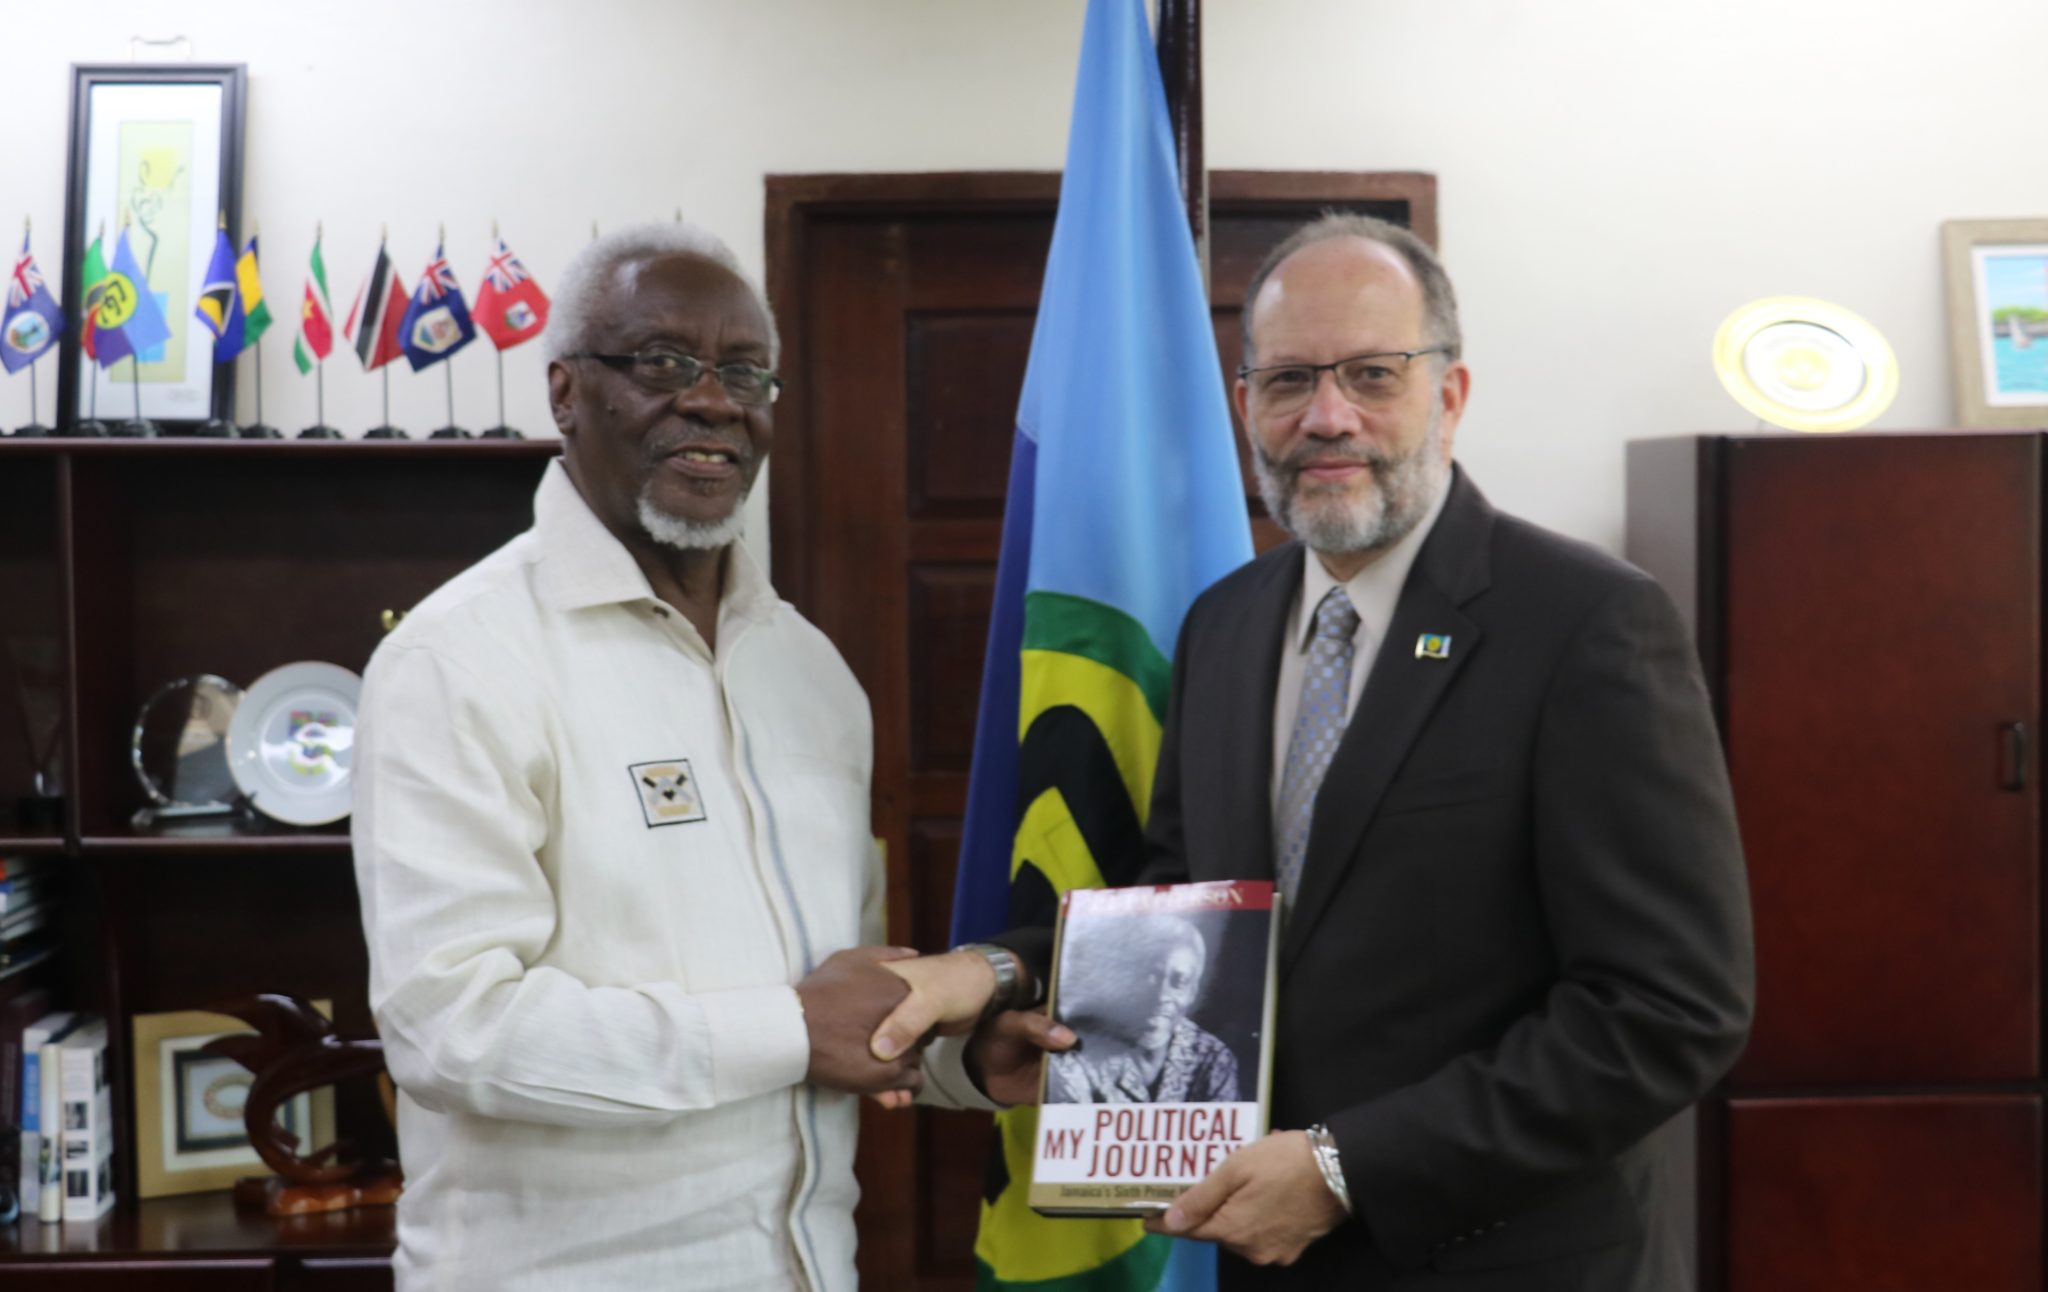 Former Jamaica Prime Minister presents copy of new book to CARICOM Secretary-General